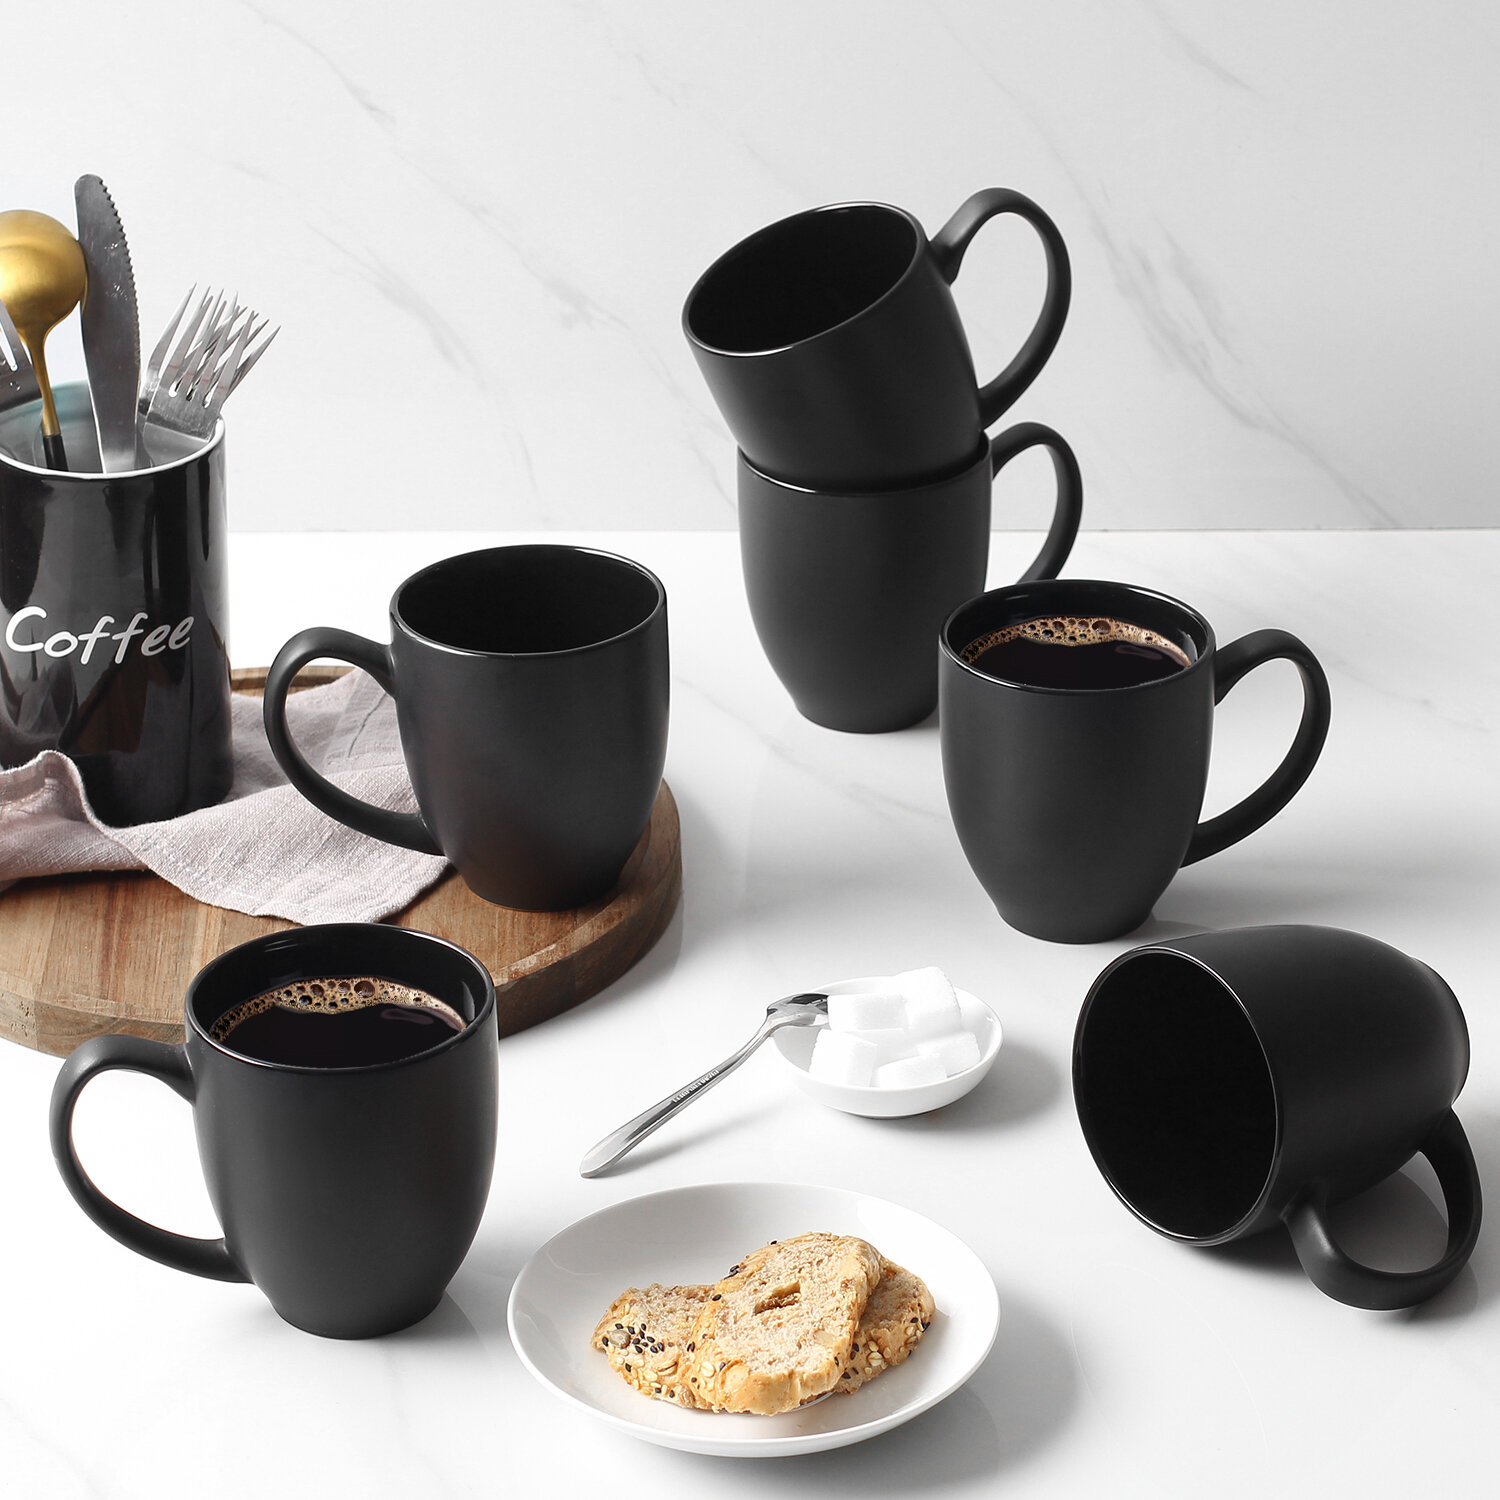 Large Coffee Mugs Set of 6, 18 Oz Ceramic Mugs Set with Sturdy Handle for  Coffee